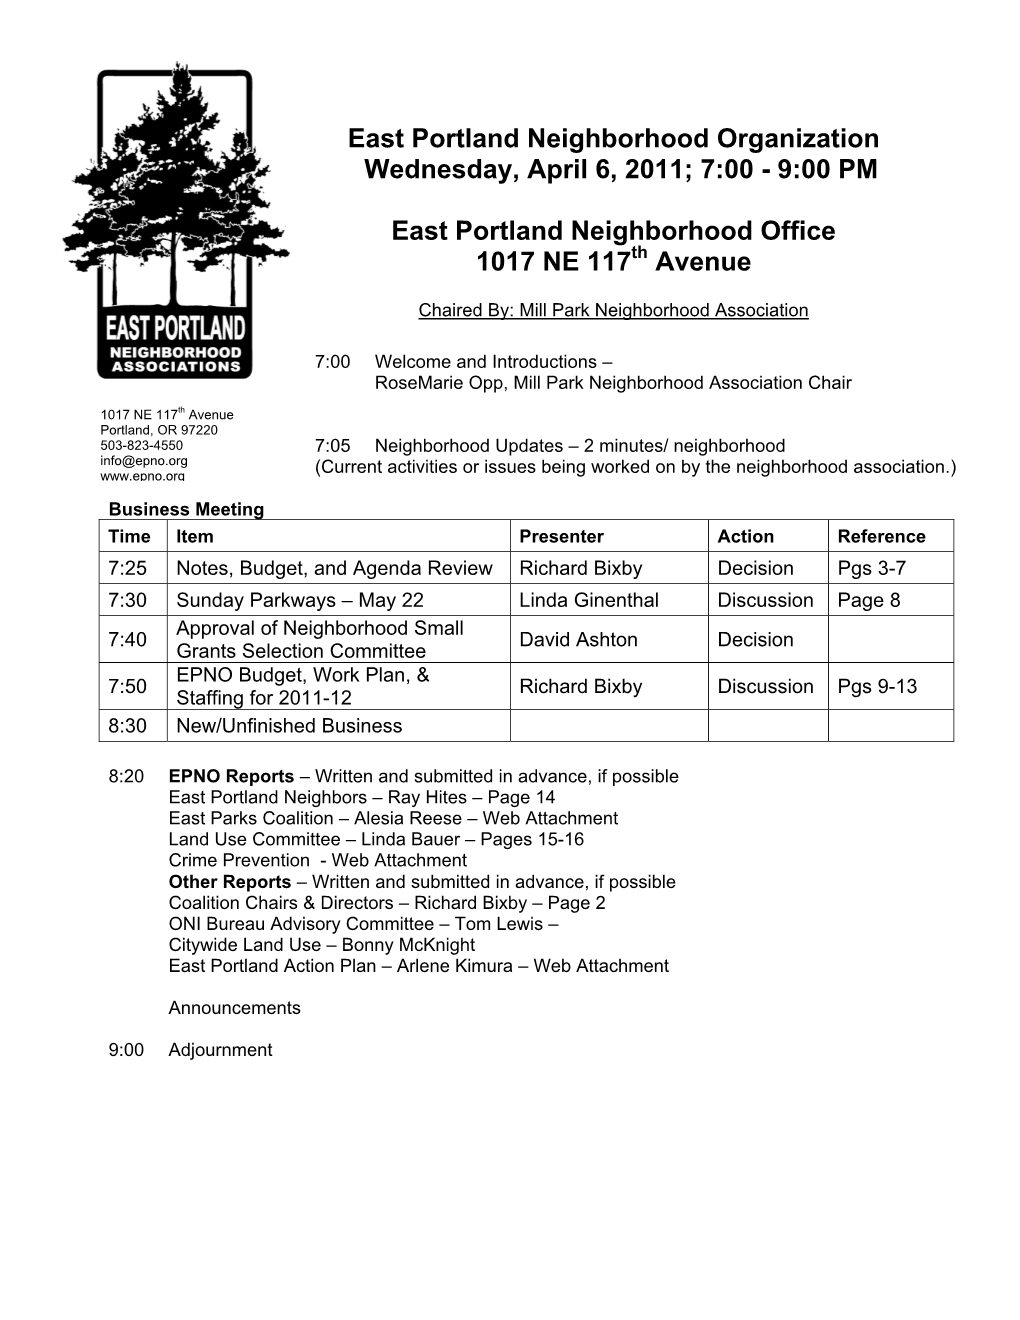 East Portland Neighborhood Organization Wednesday, April 6, 2011; 7:00 - 9:00 PM